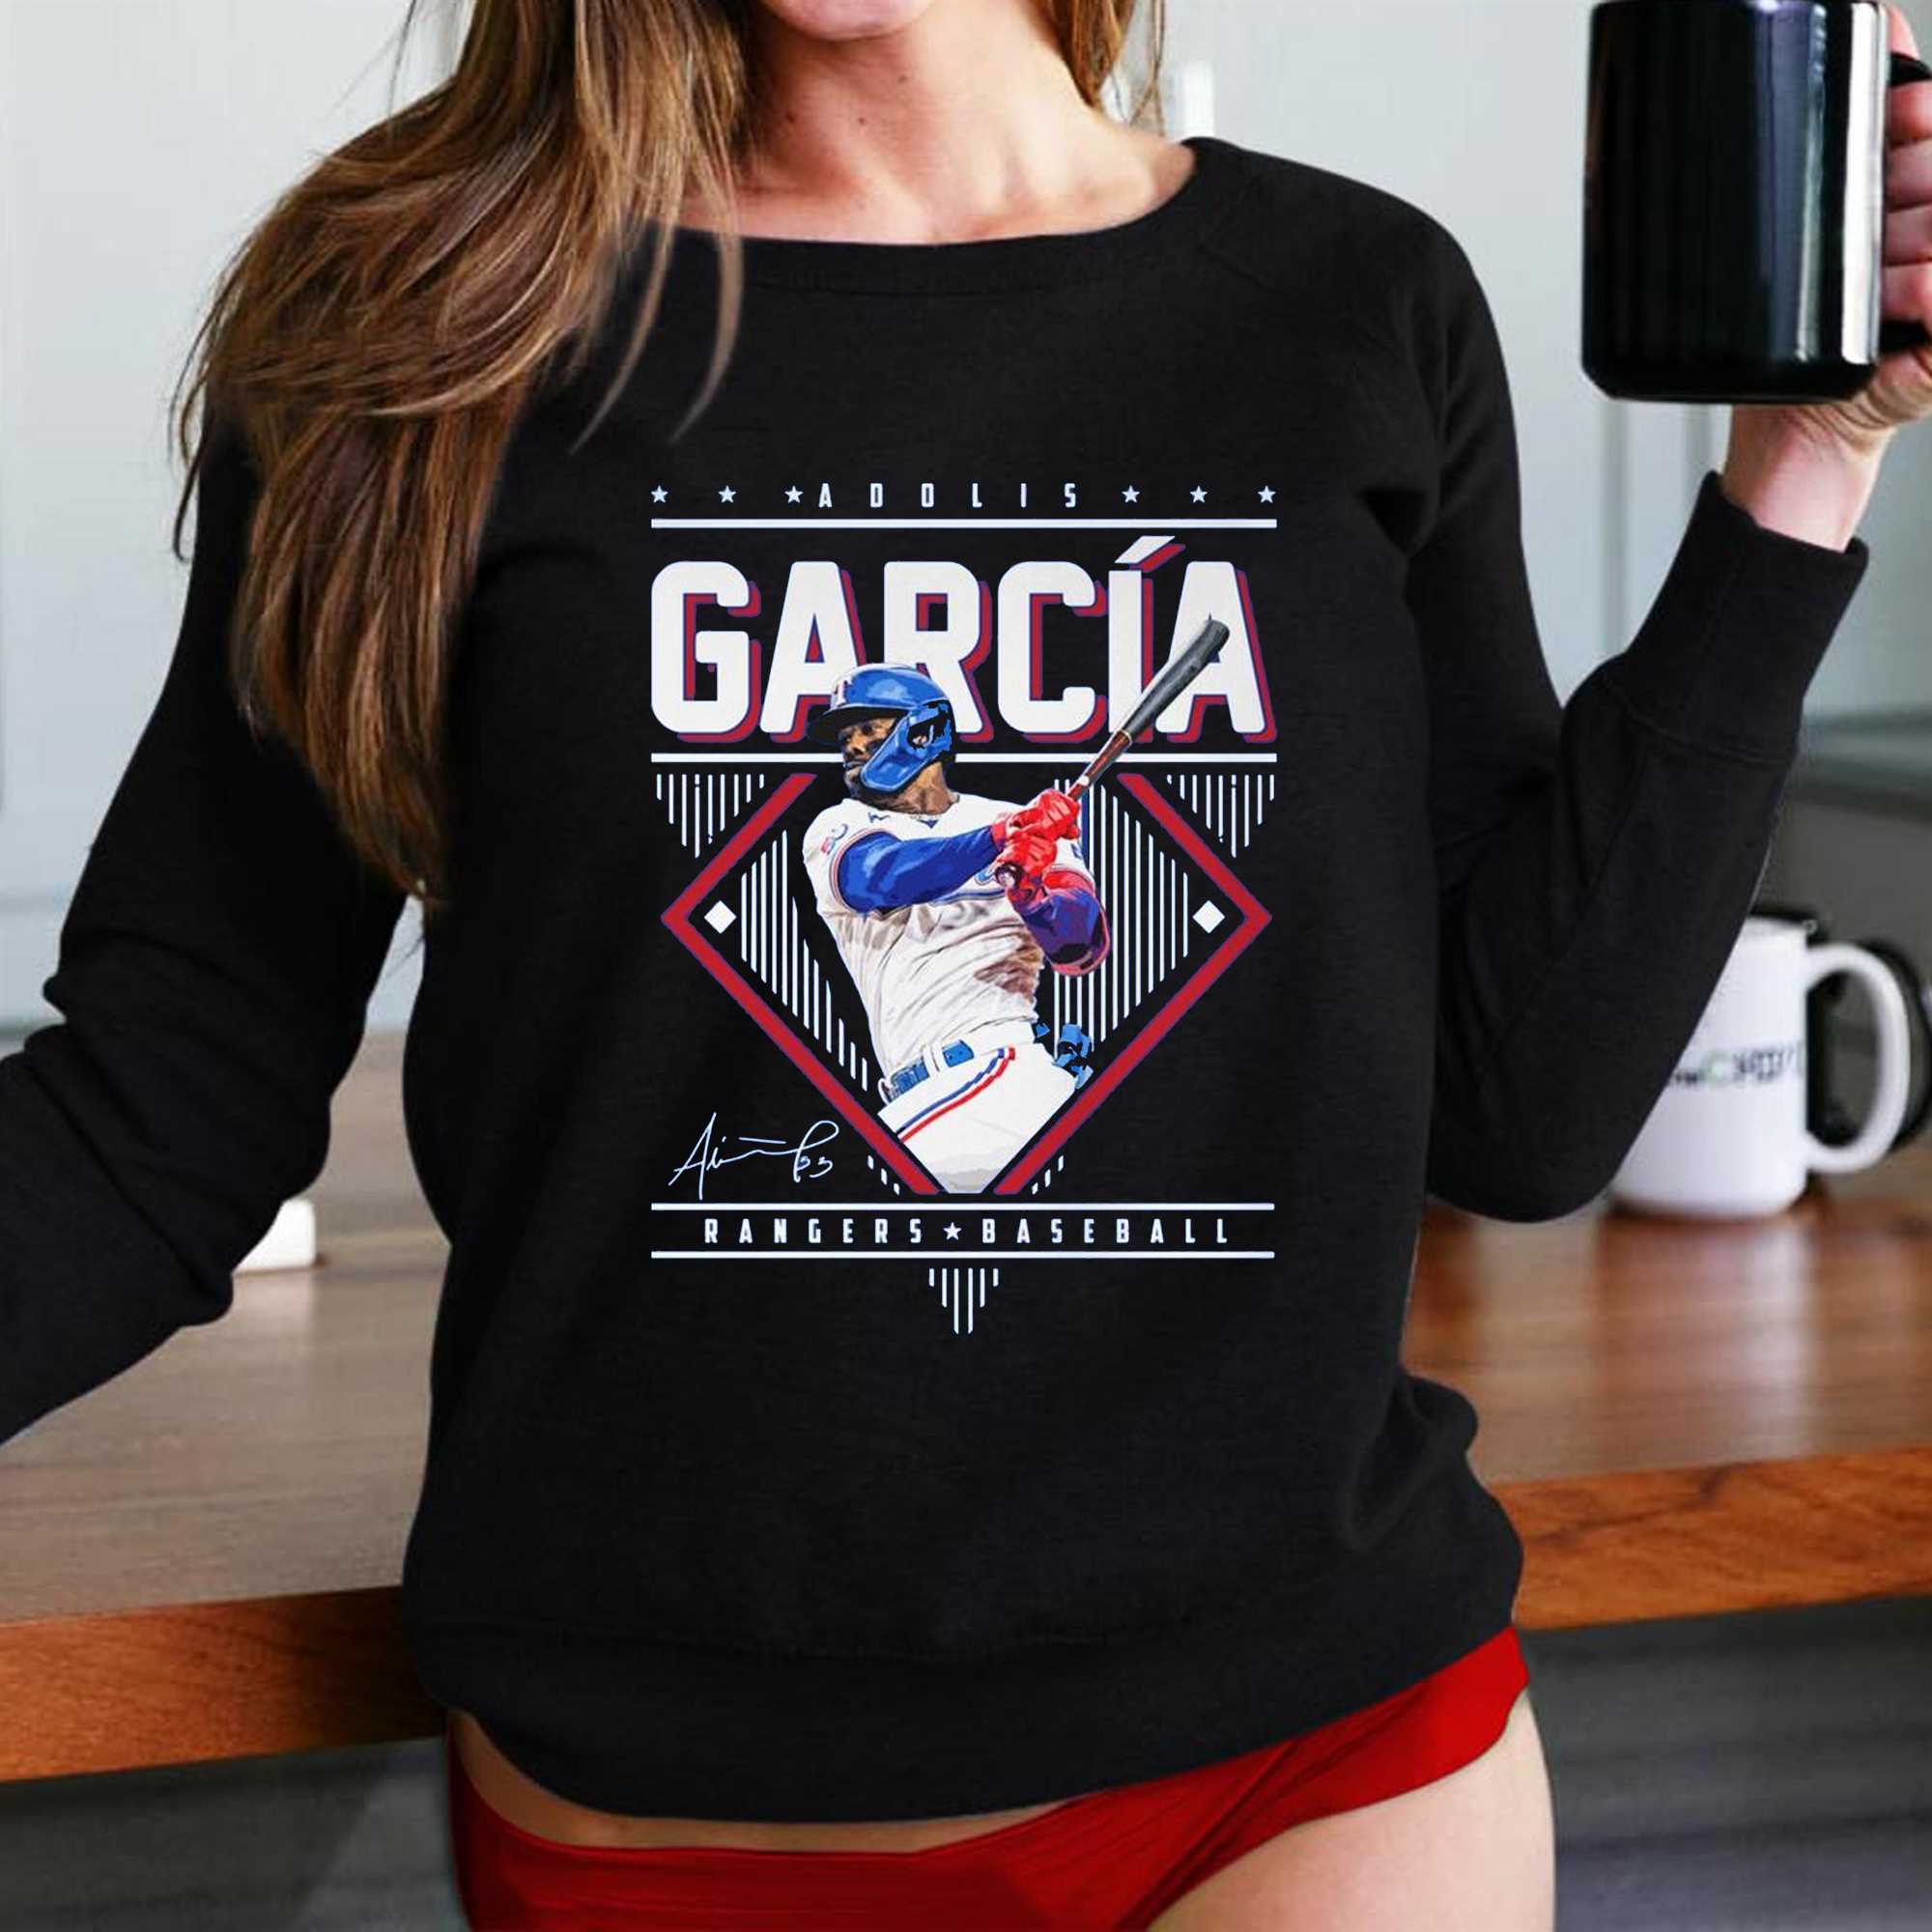 Garcia Rangers Baseball Unisex T-Shirt - Torunstyle